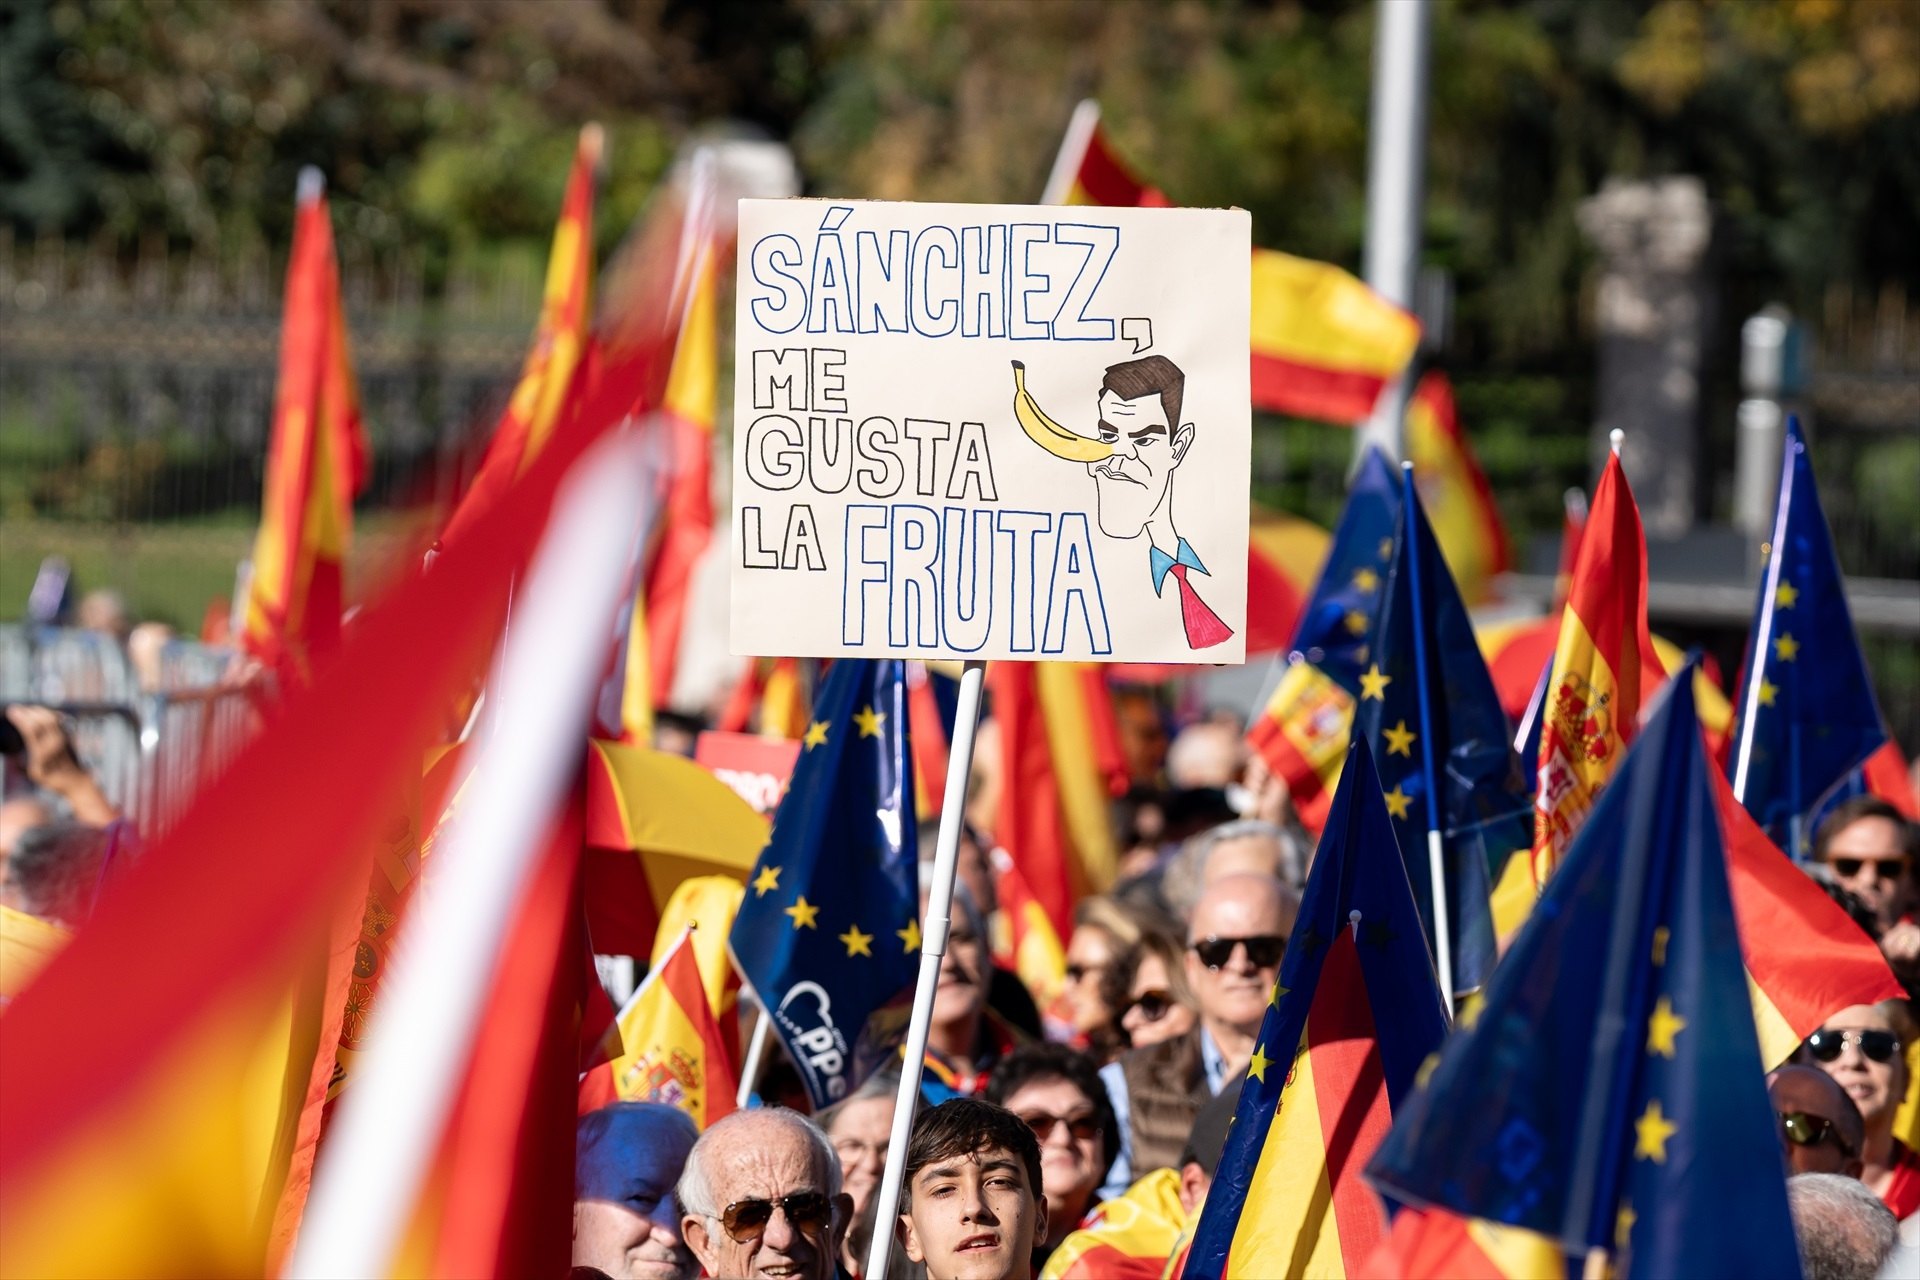 L'espanyolisme radical convoca una nova protesta contra Sánchez: "Ni Putin, ni Puigdemont, ni narcos"